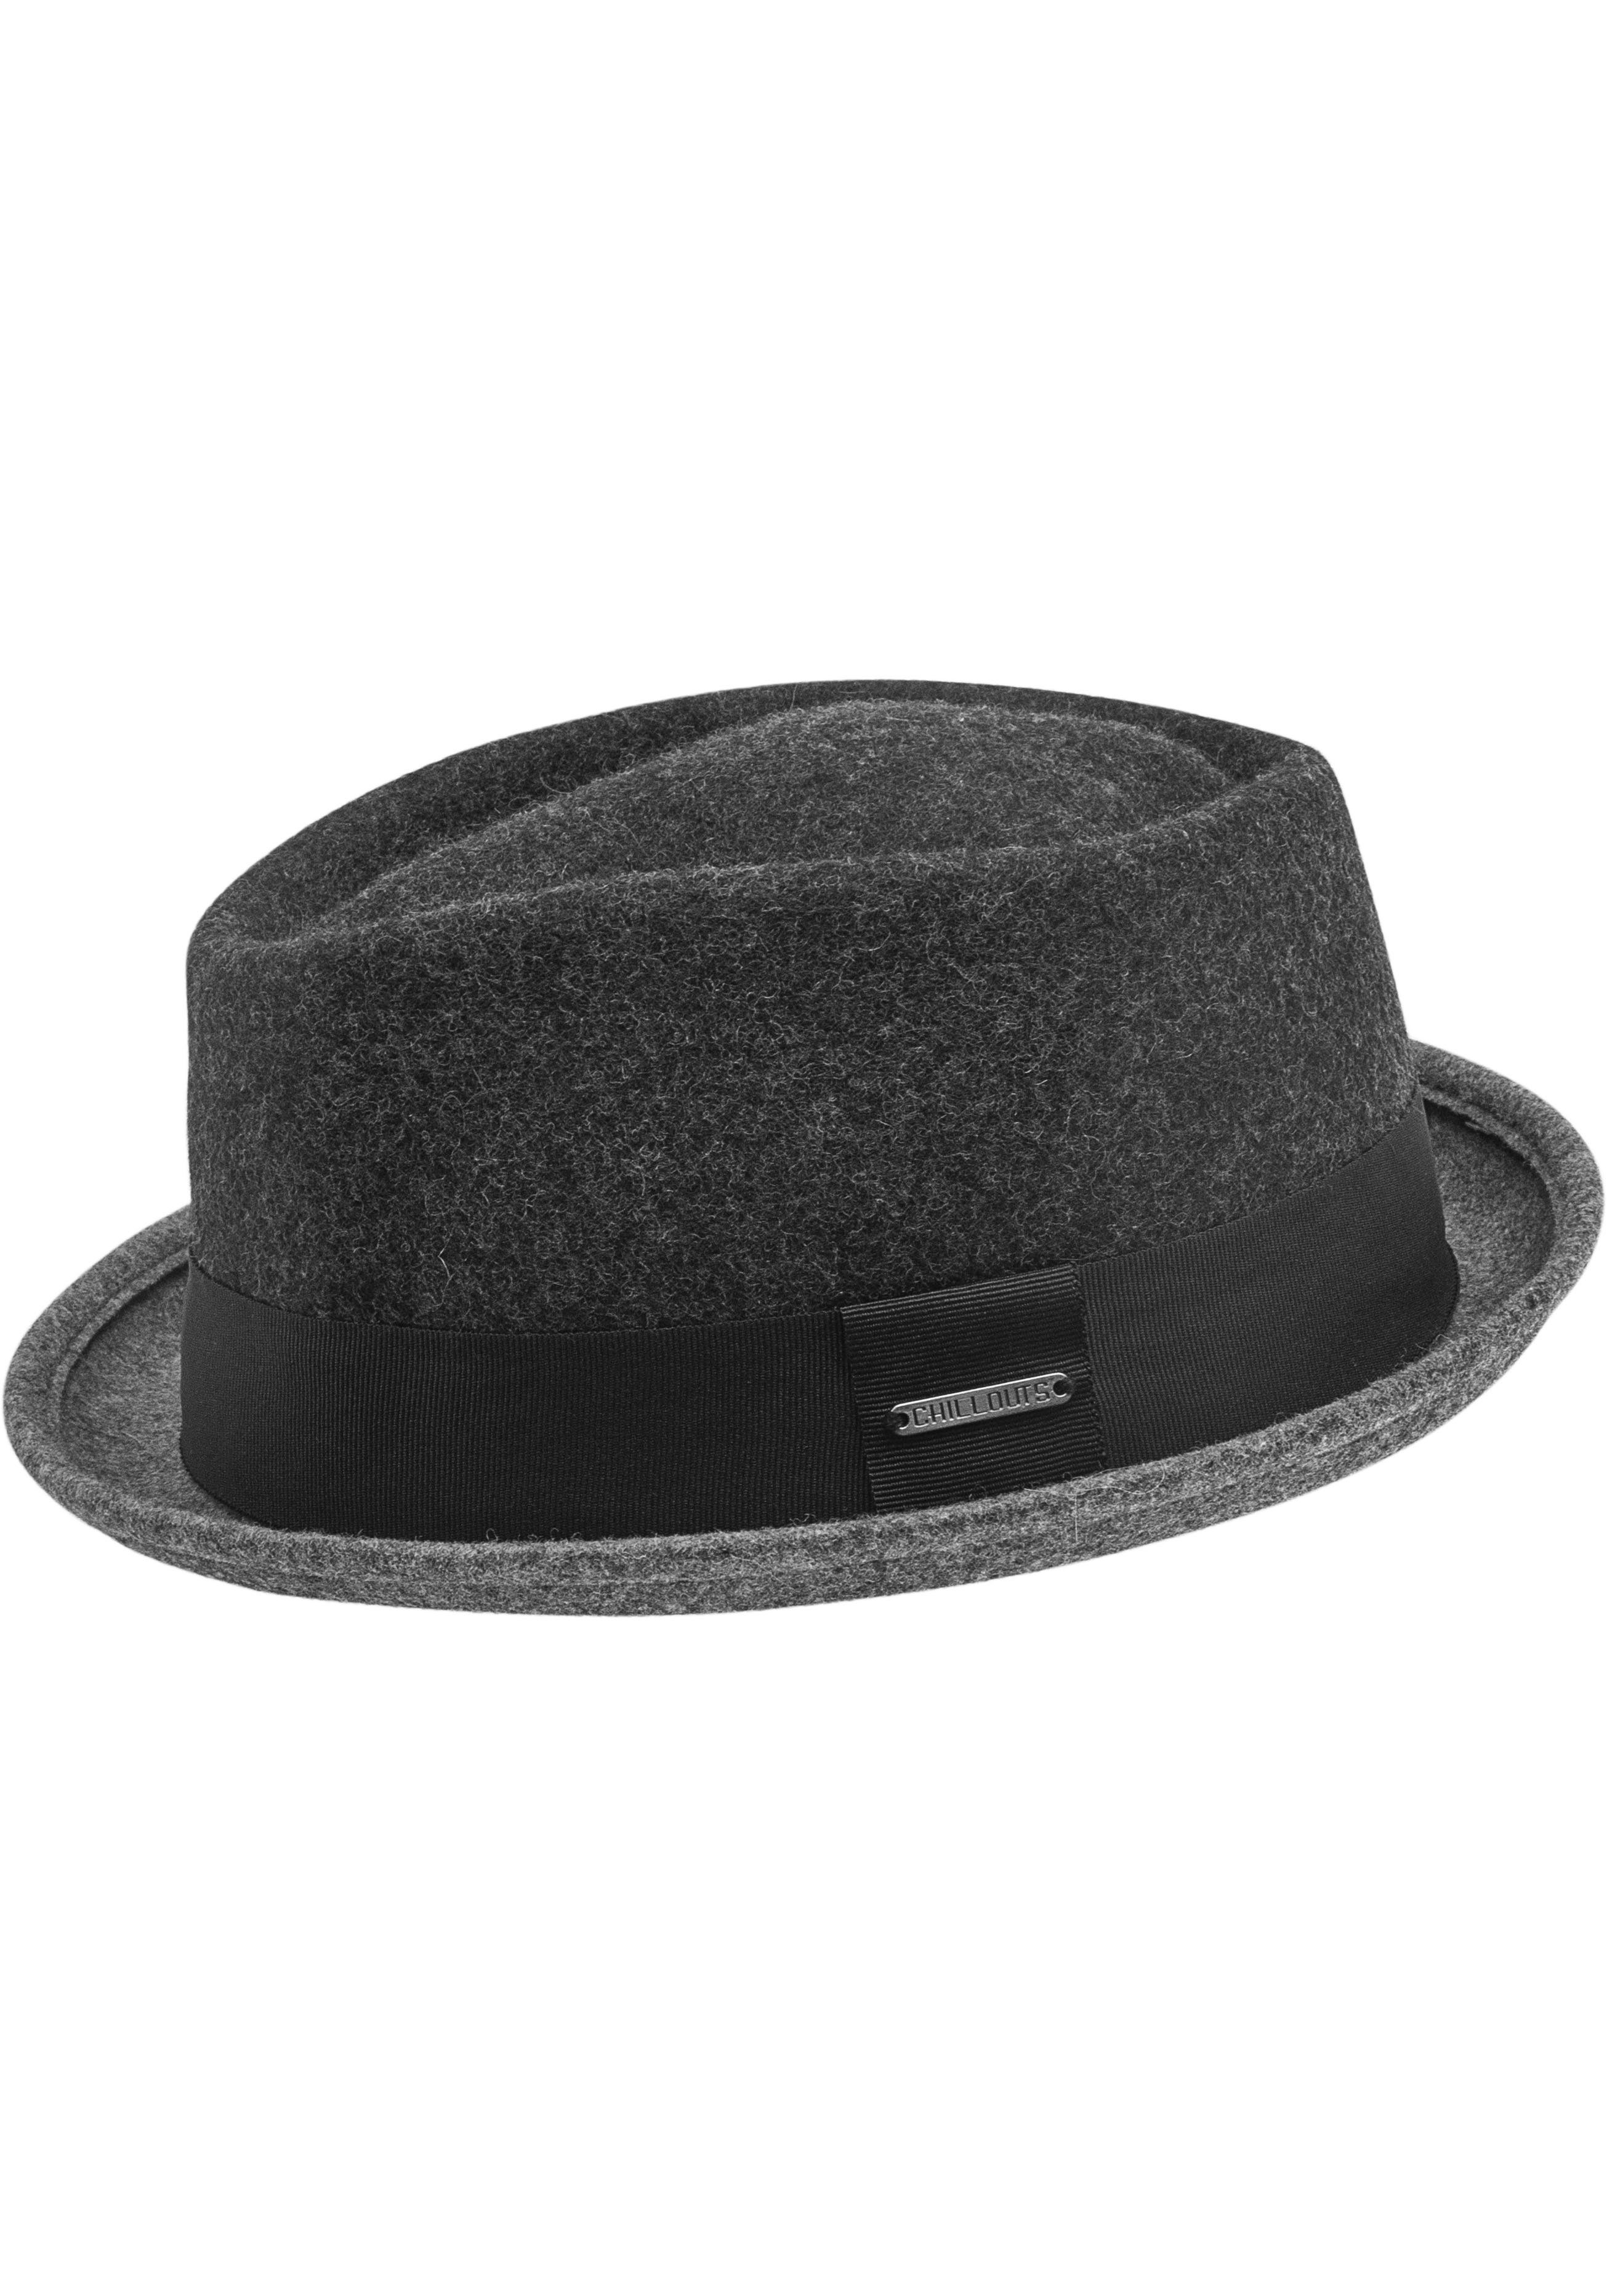 Hat chillouts Neal grey dark Filzhut